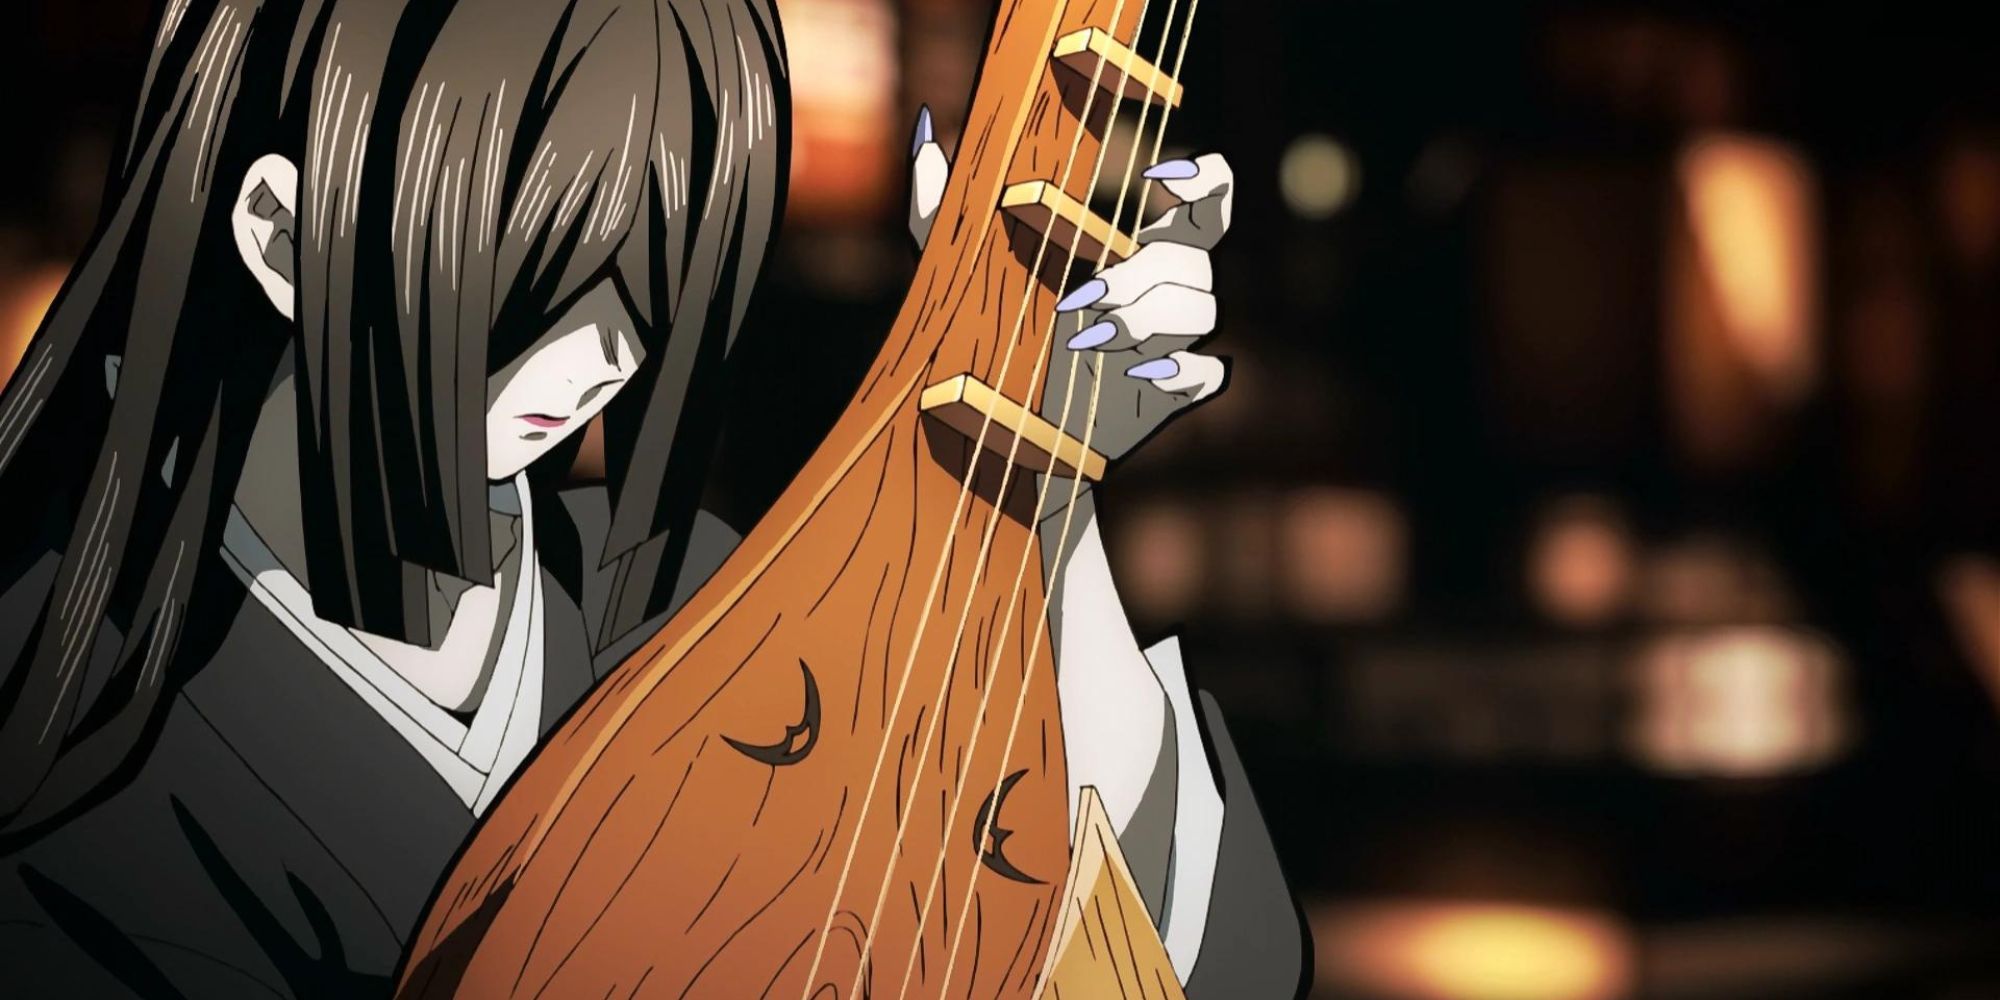 Nakime playing her four-stringed wooden biwa